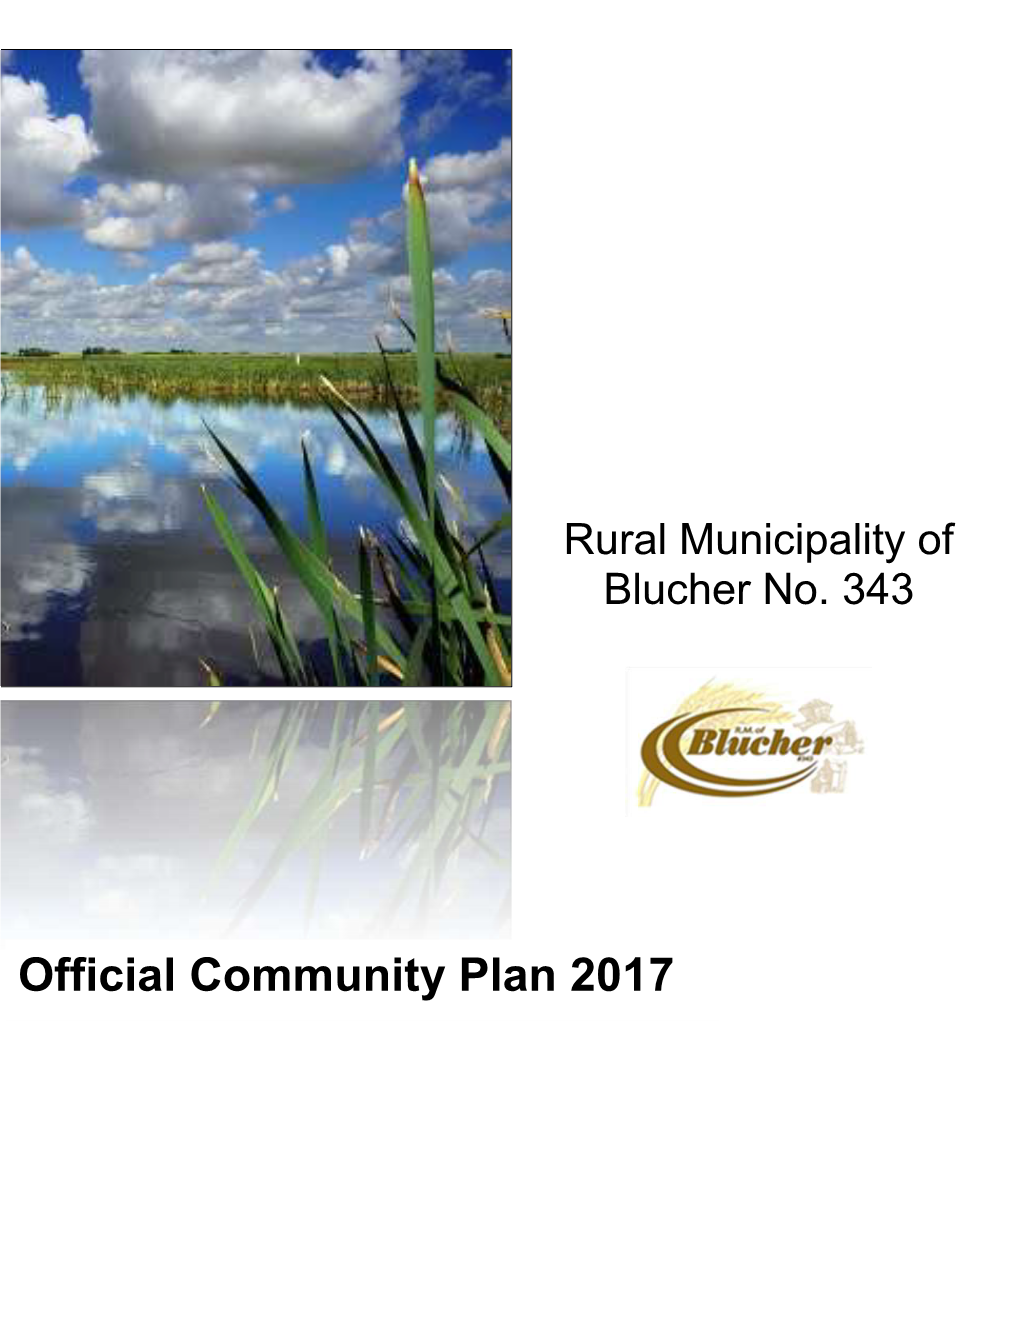 Rural Municipality of Blucher No. 343